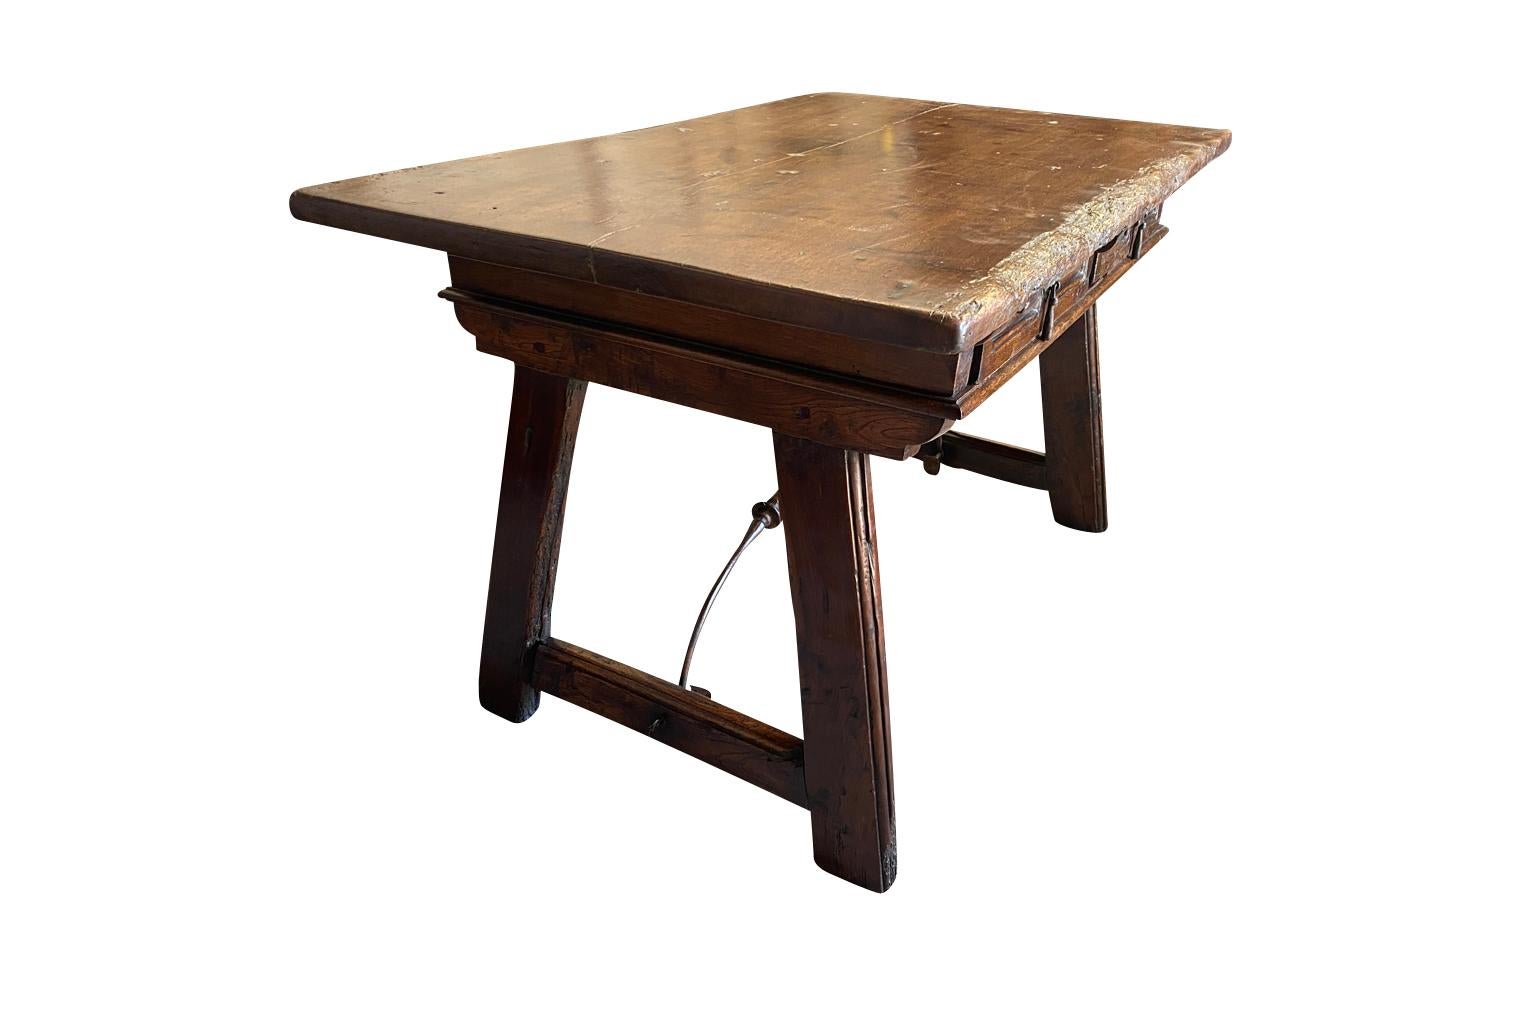 European 17th Century Spanish Writing Table - Desk For Sale